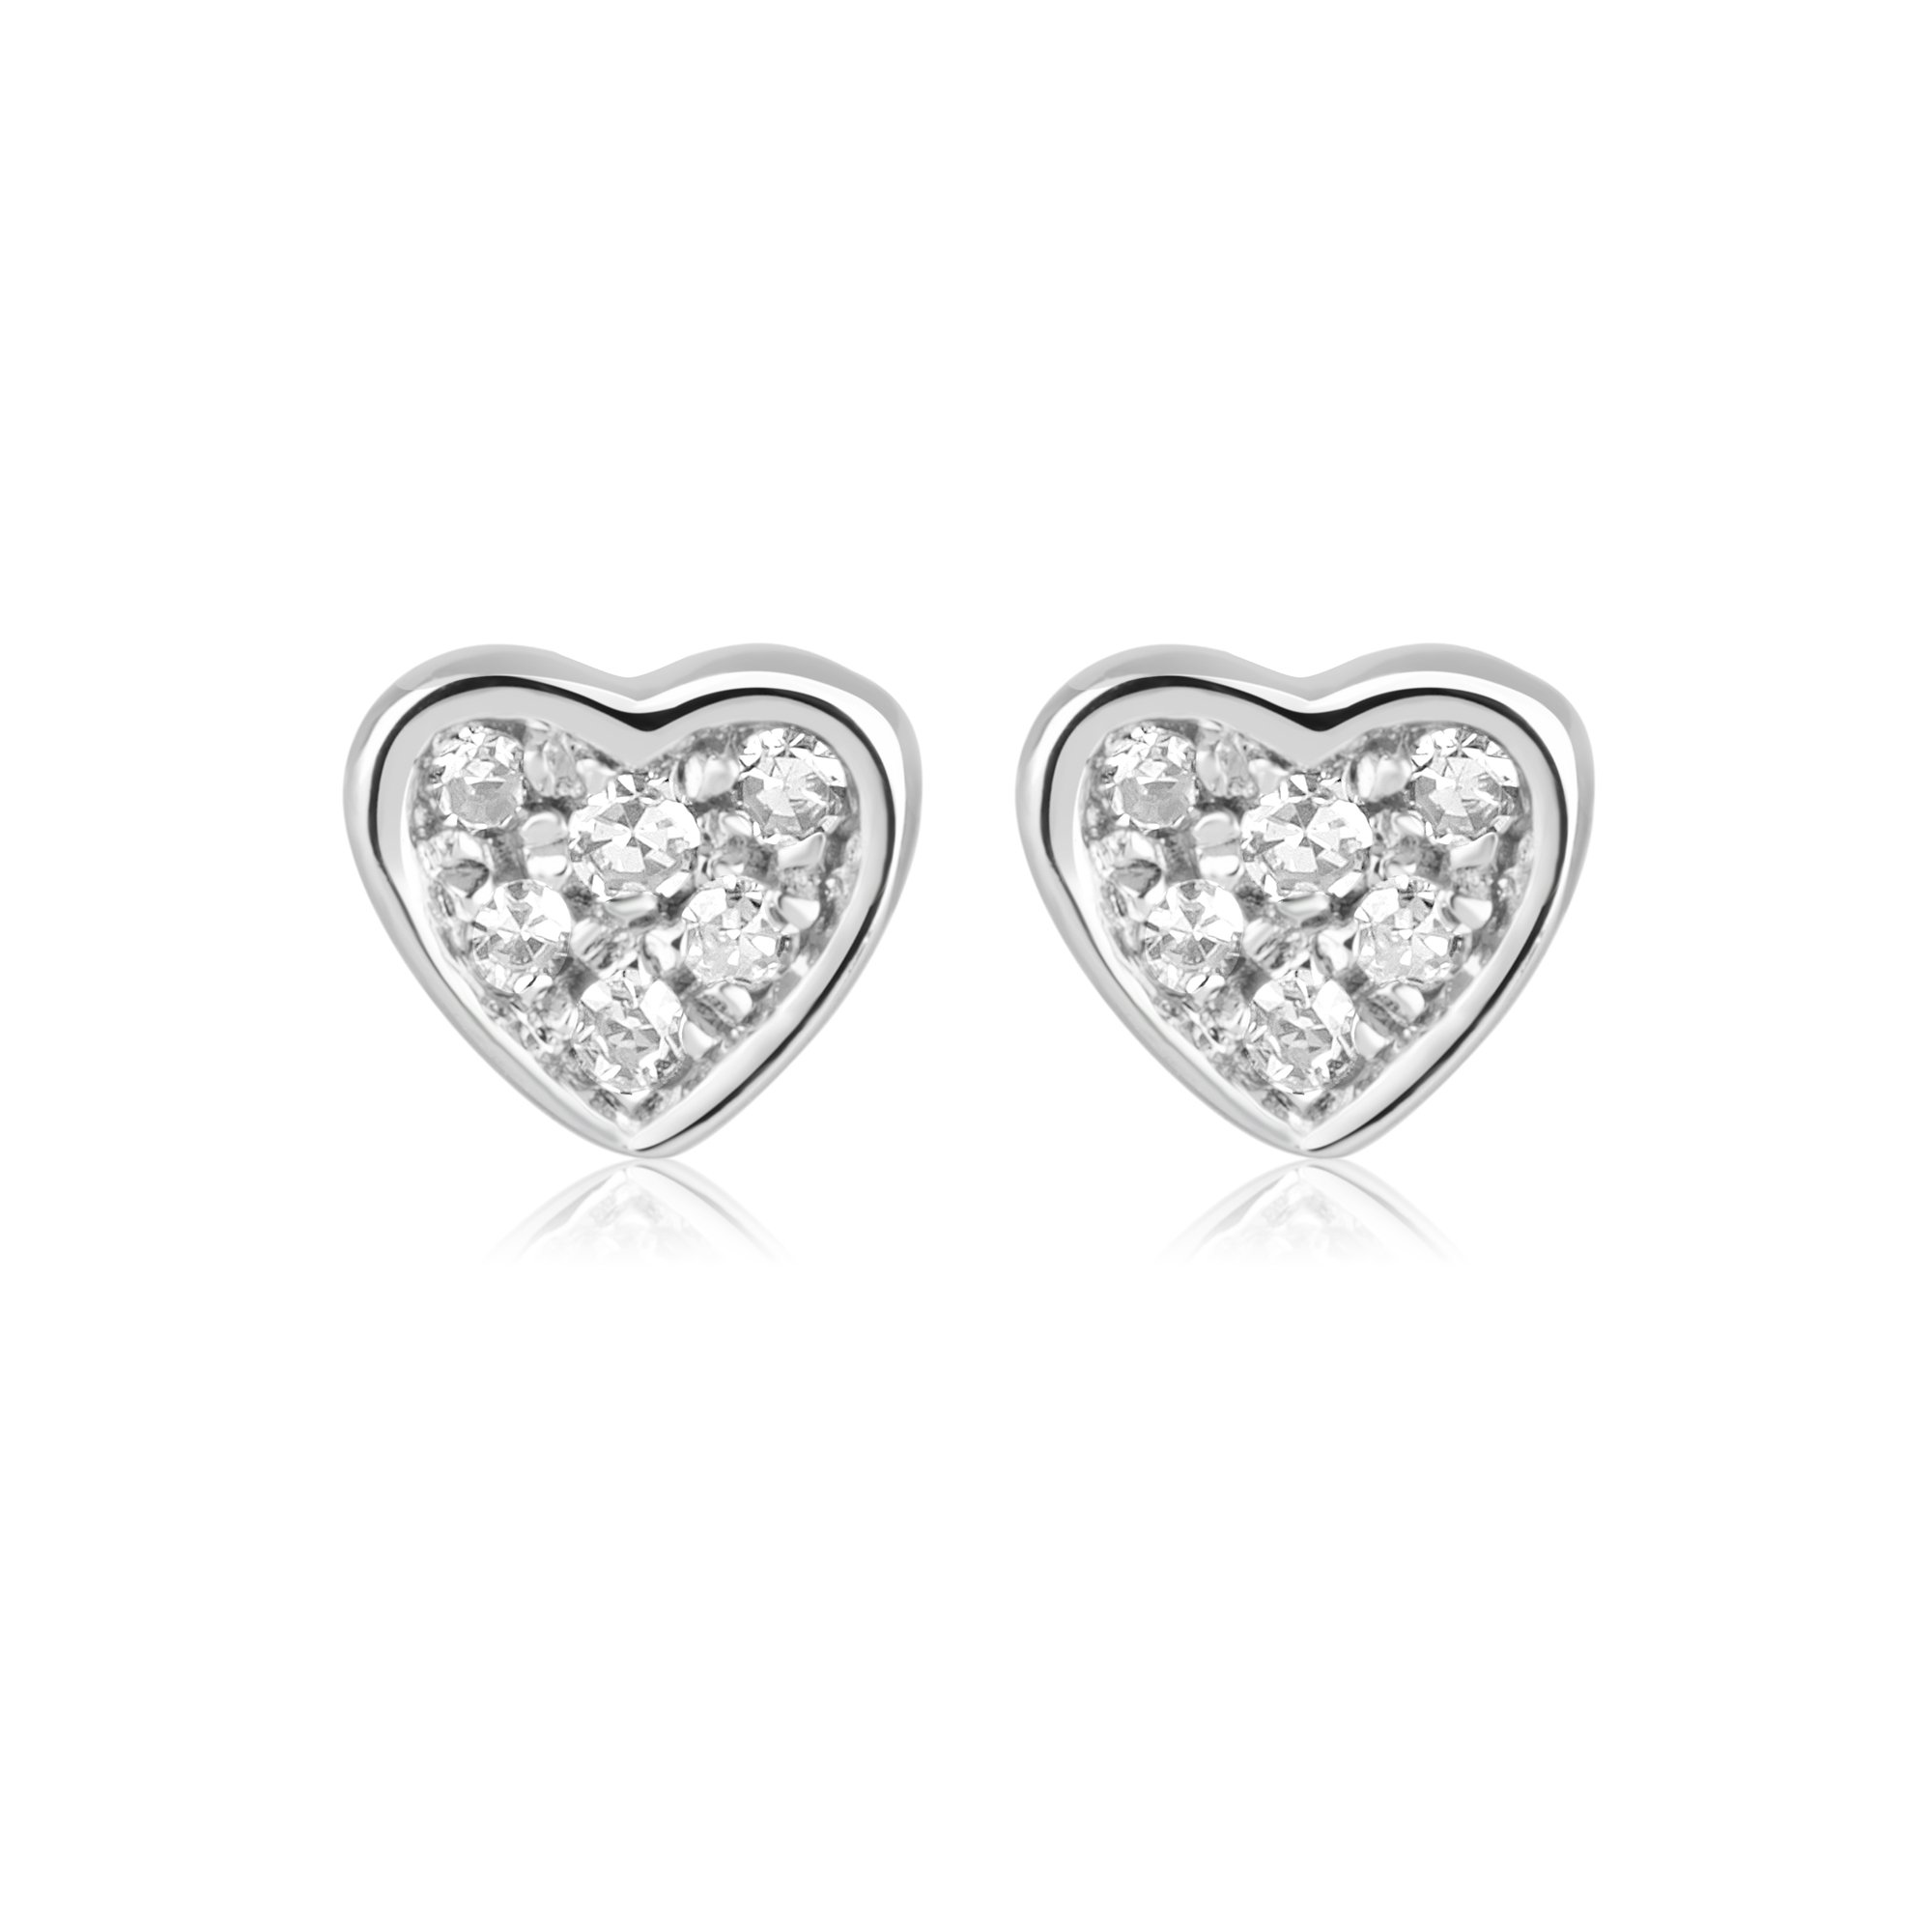 Buy Diamond Heart Studs, Diamond Heart Earrings, 14k Gold Heart Studs  Online in India - Etsy